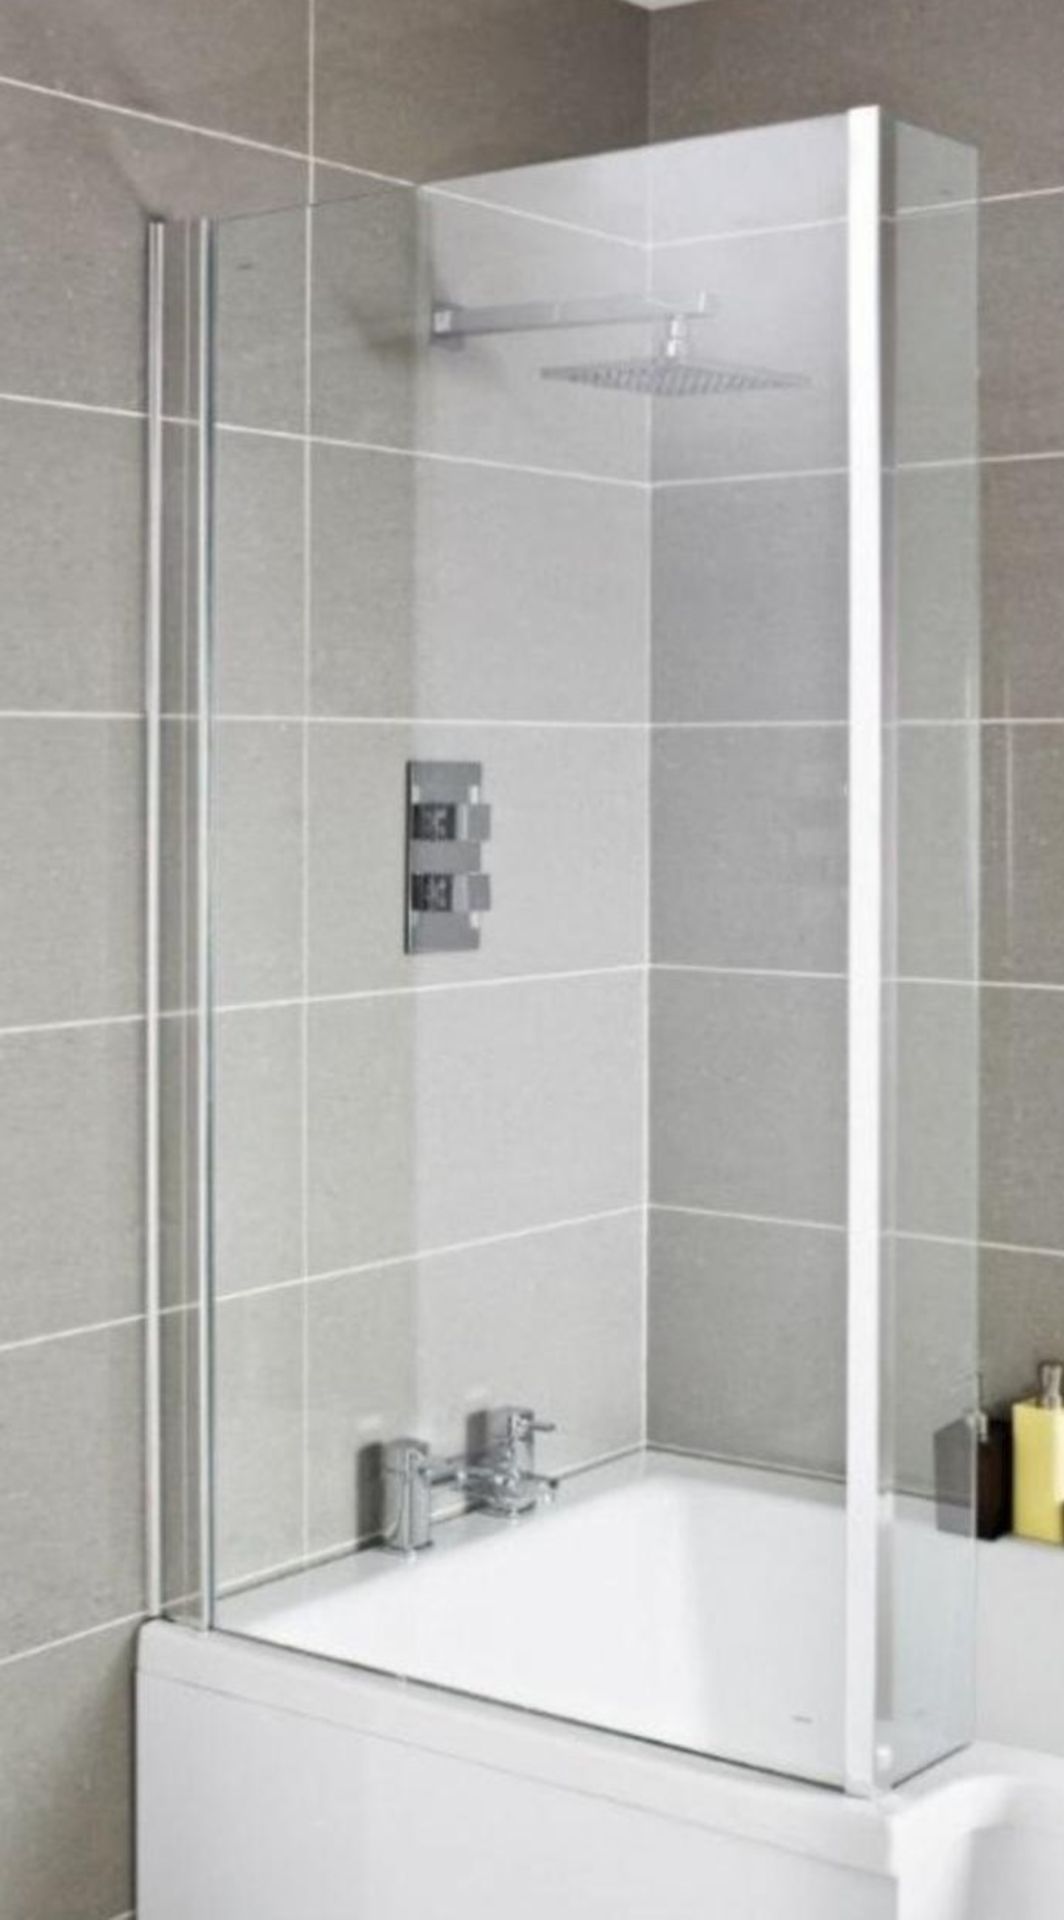 Showercube L-Shaped Bathscreen Single-Sided Chrome BNIB RRP £209